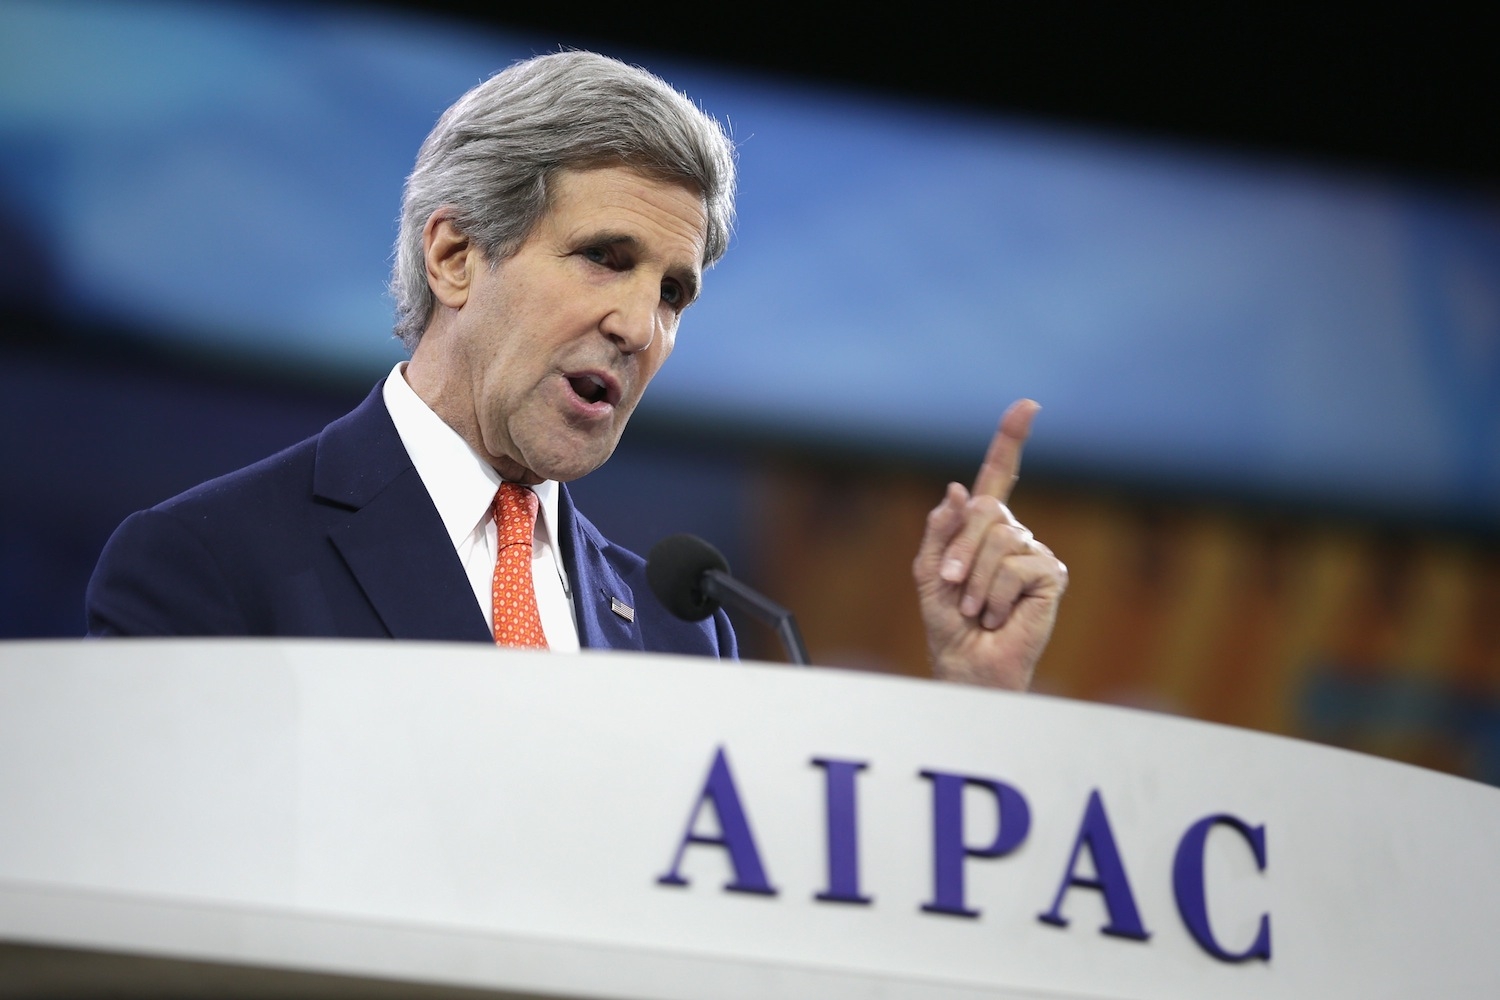 Secretary Kerry at AIPAC 2014